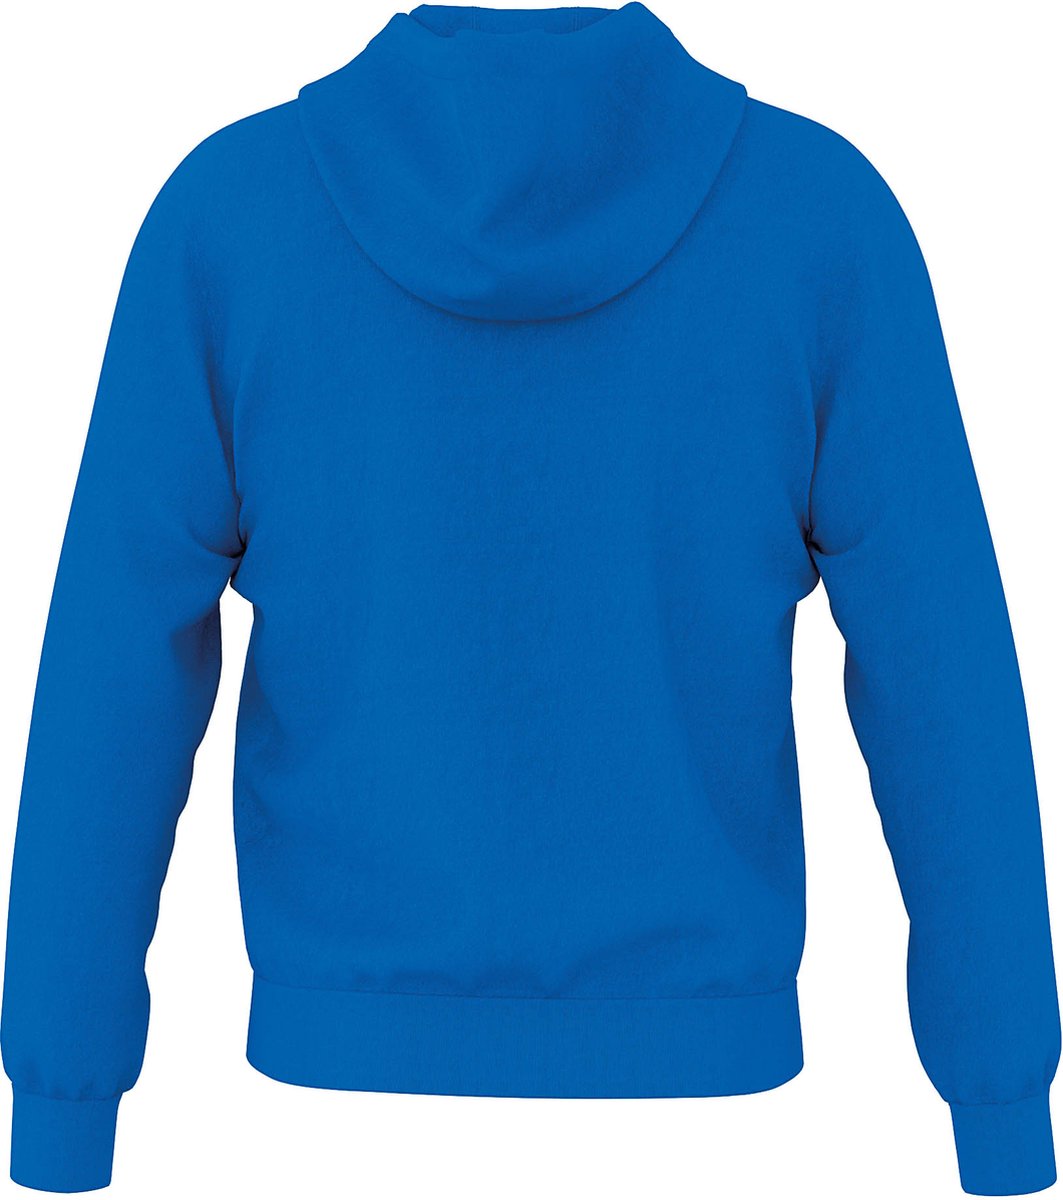 Blauwe Errea Draad 3.0 Sweatshirt - Sportwear - Volwassen